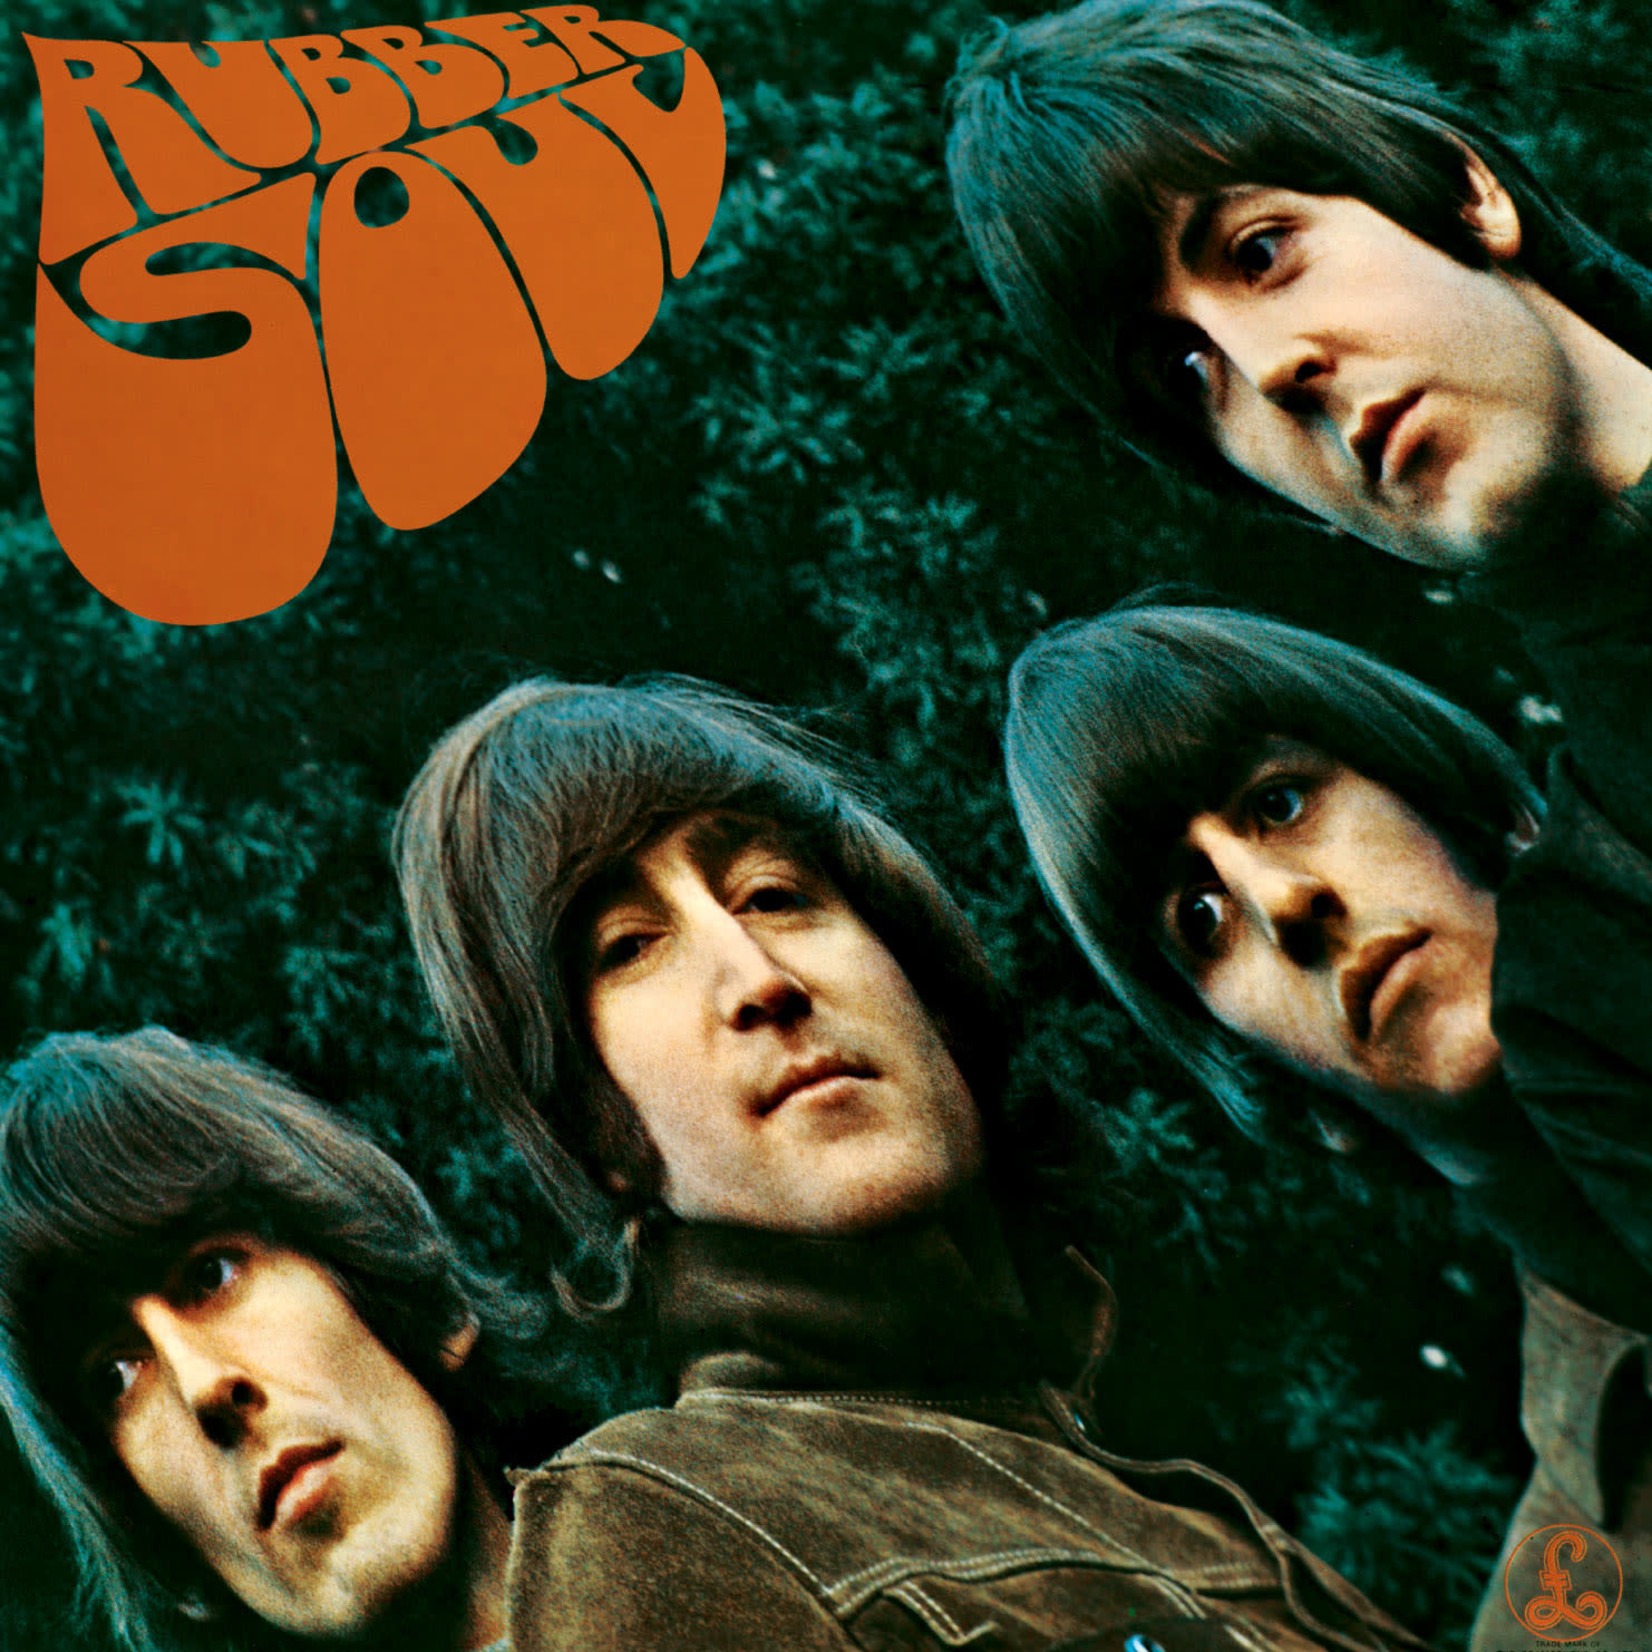 [Vintage] Beatles - Rubber Soul (stereo, non-rainbow reissue)